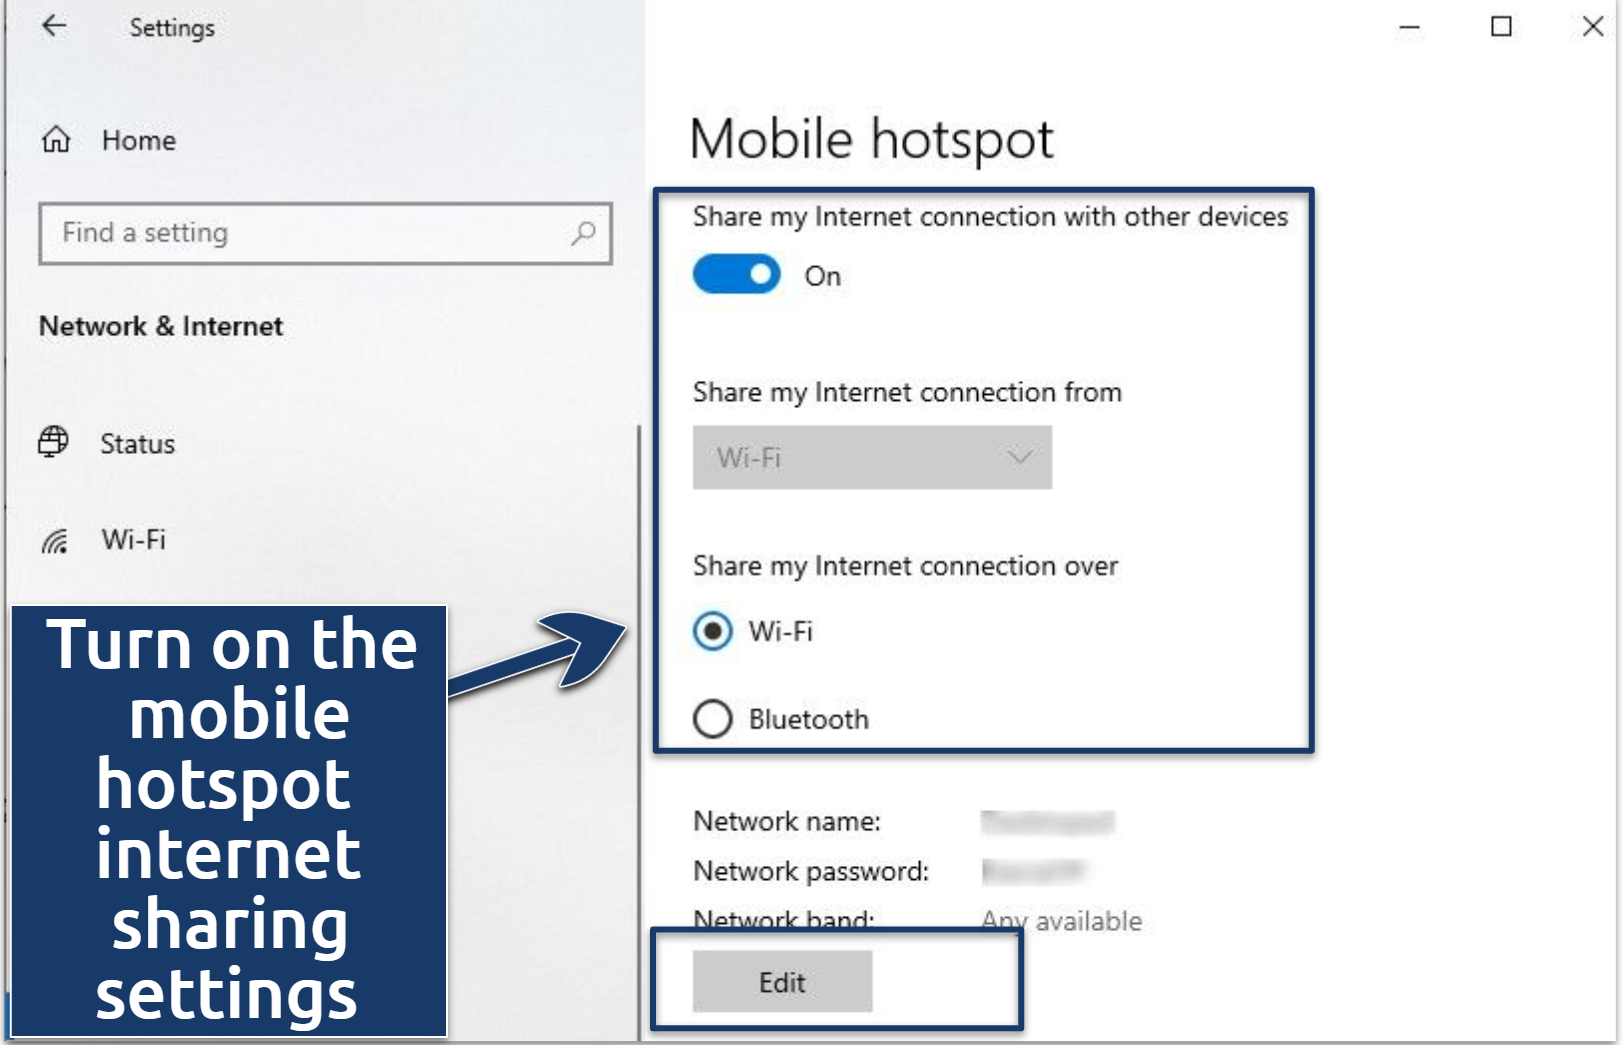 A screenshot showing the mobile hotspot settings on Windows 10